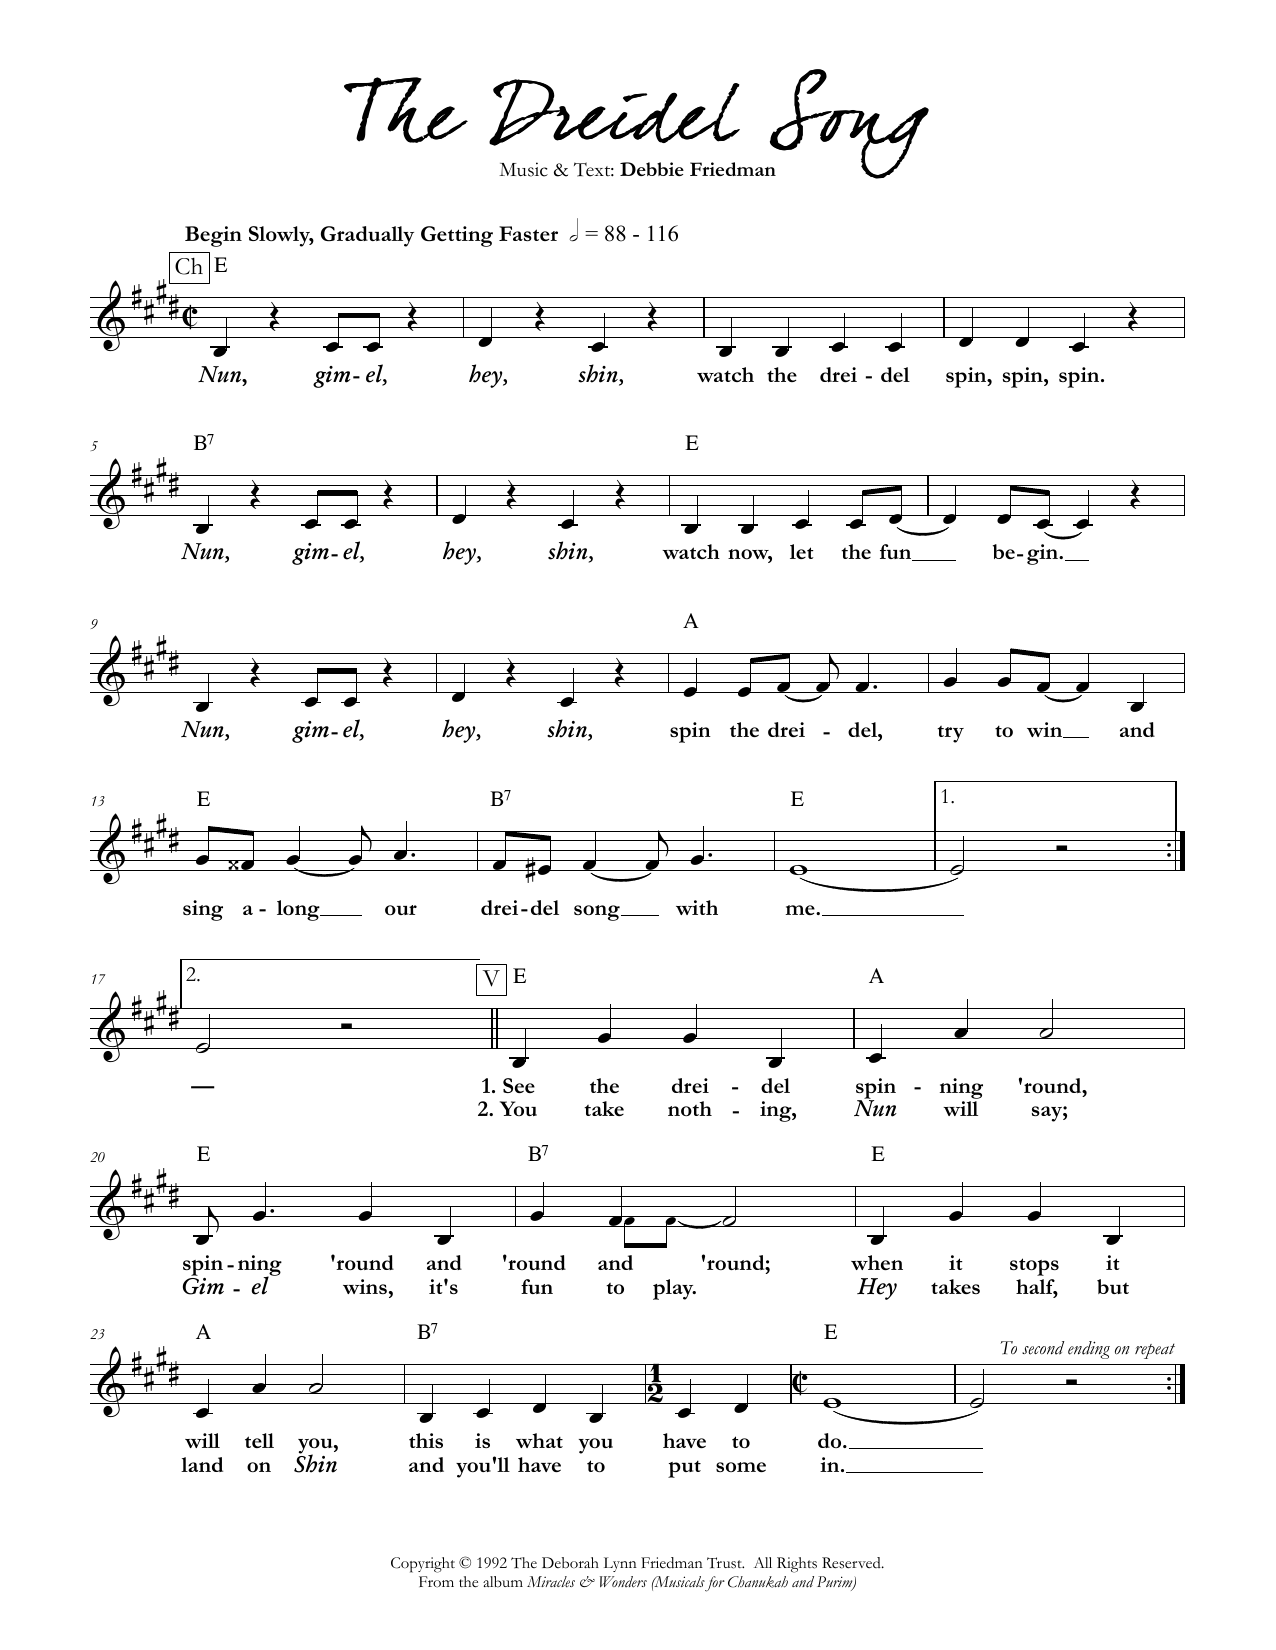 Debbie Friedman The Dreidel Song Sheet Music Notes & Chords for Lead Sheet / Fake Book - Download or Print PDF